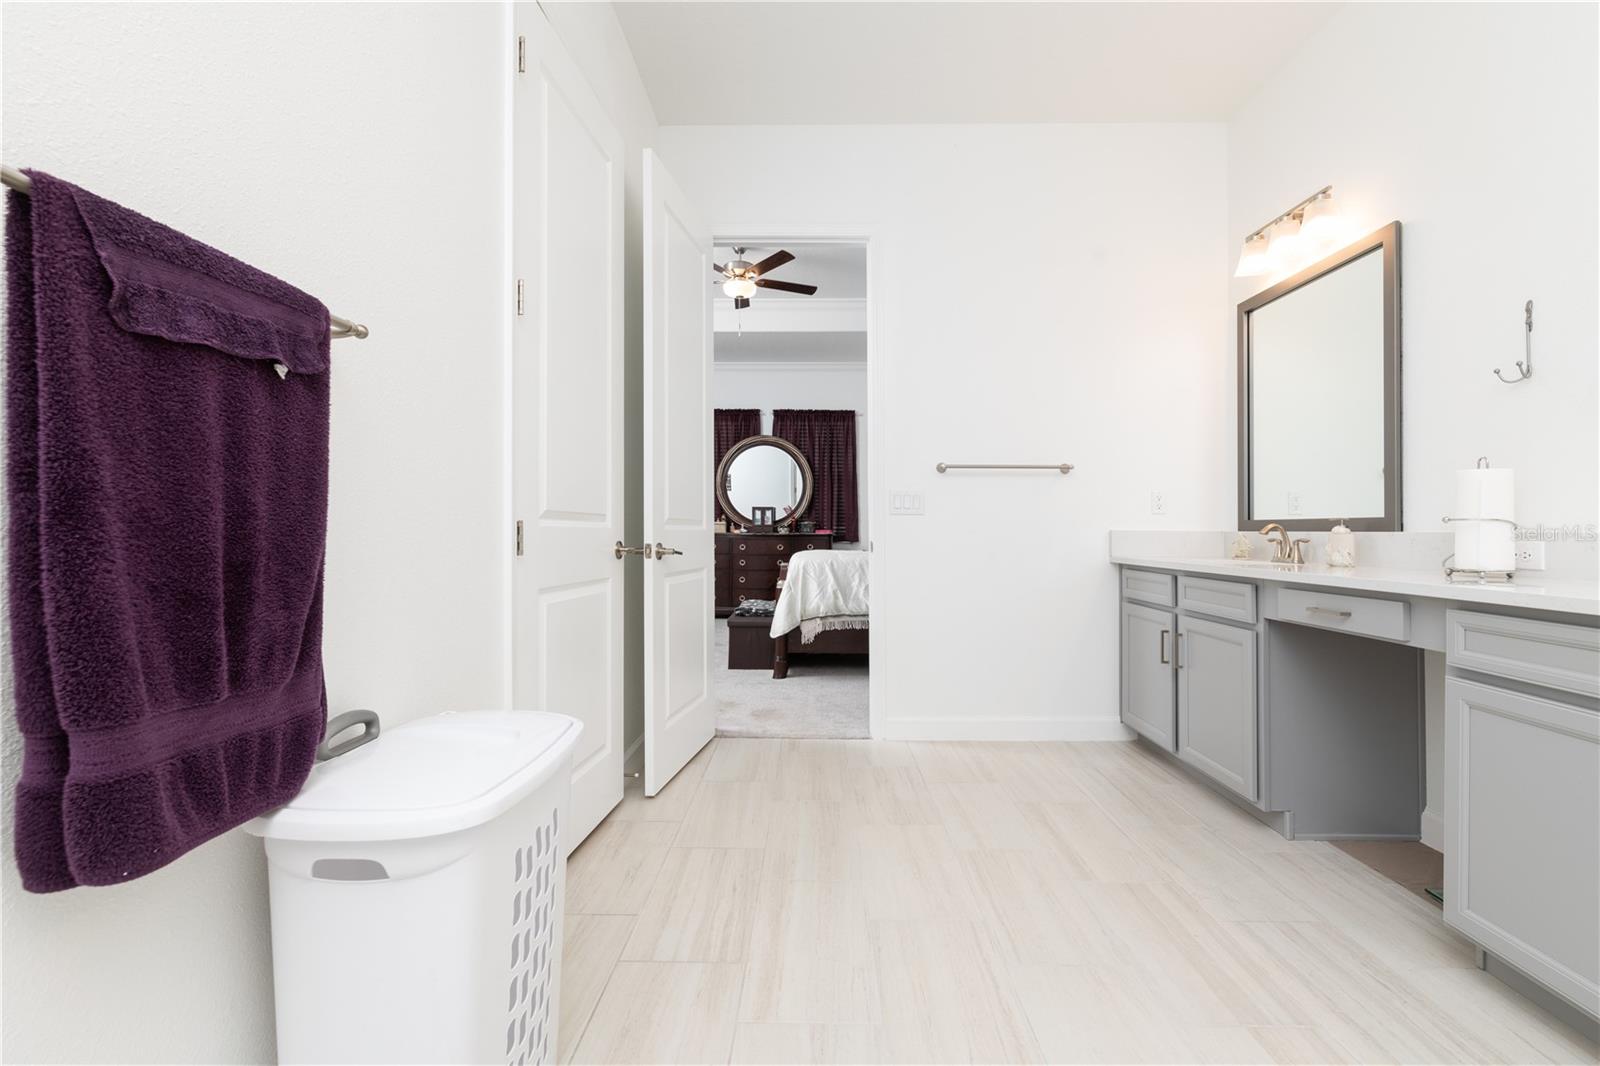 Double vanity in owners suite